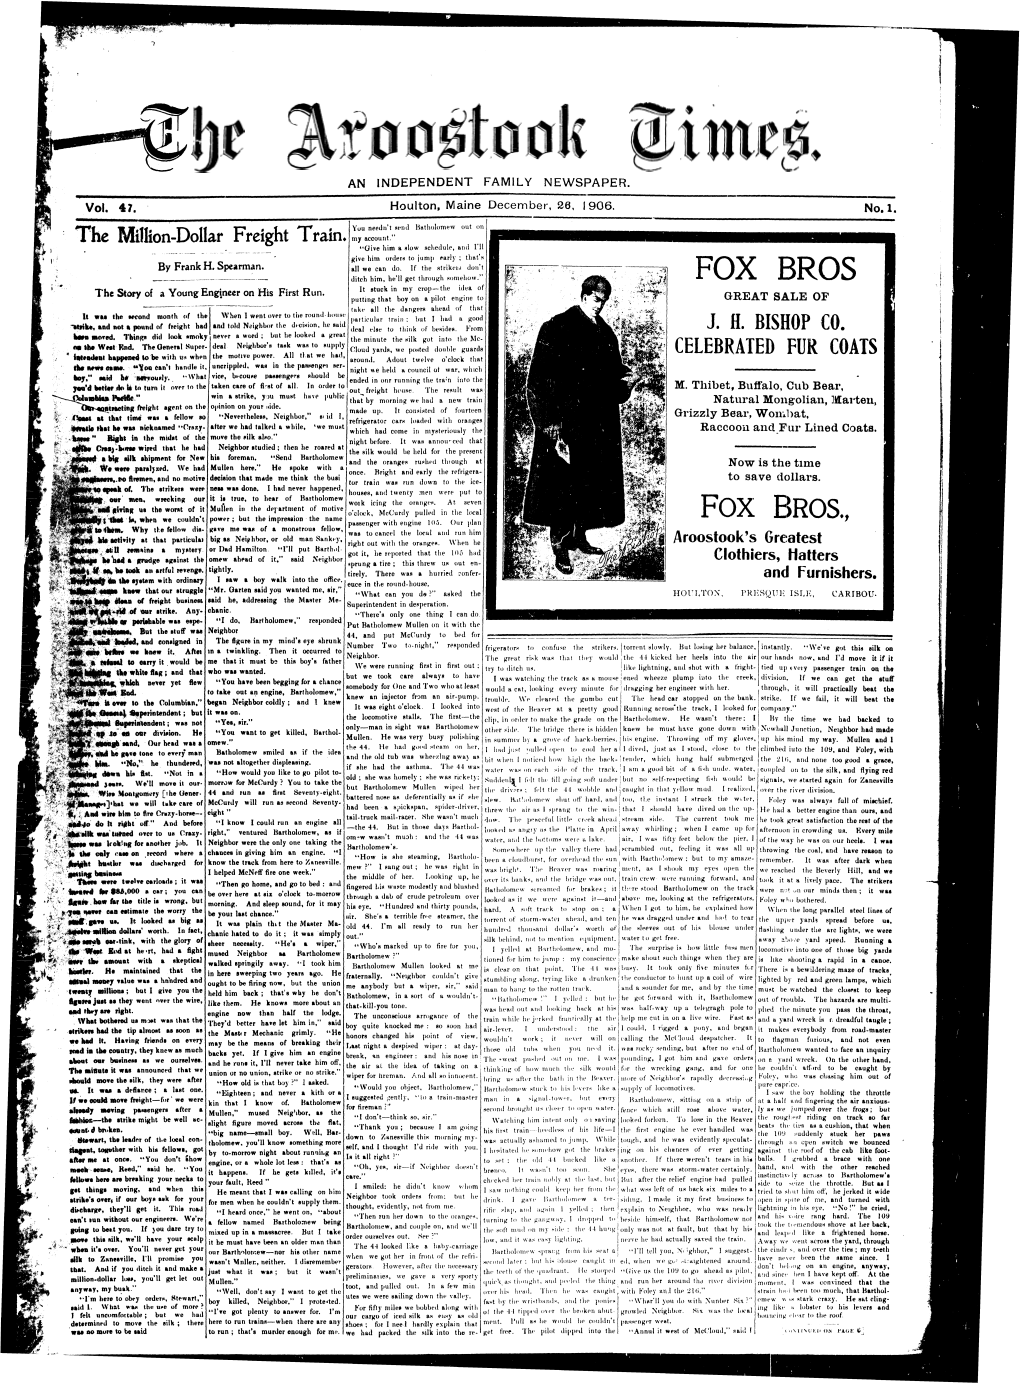 The Aroostook Times, December 26, 1906